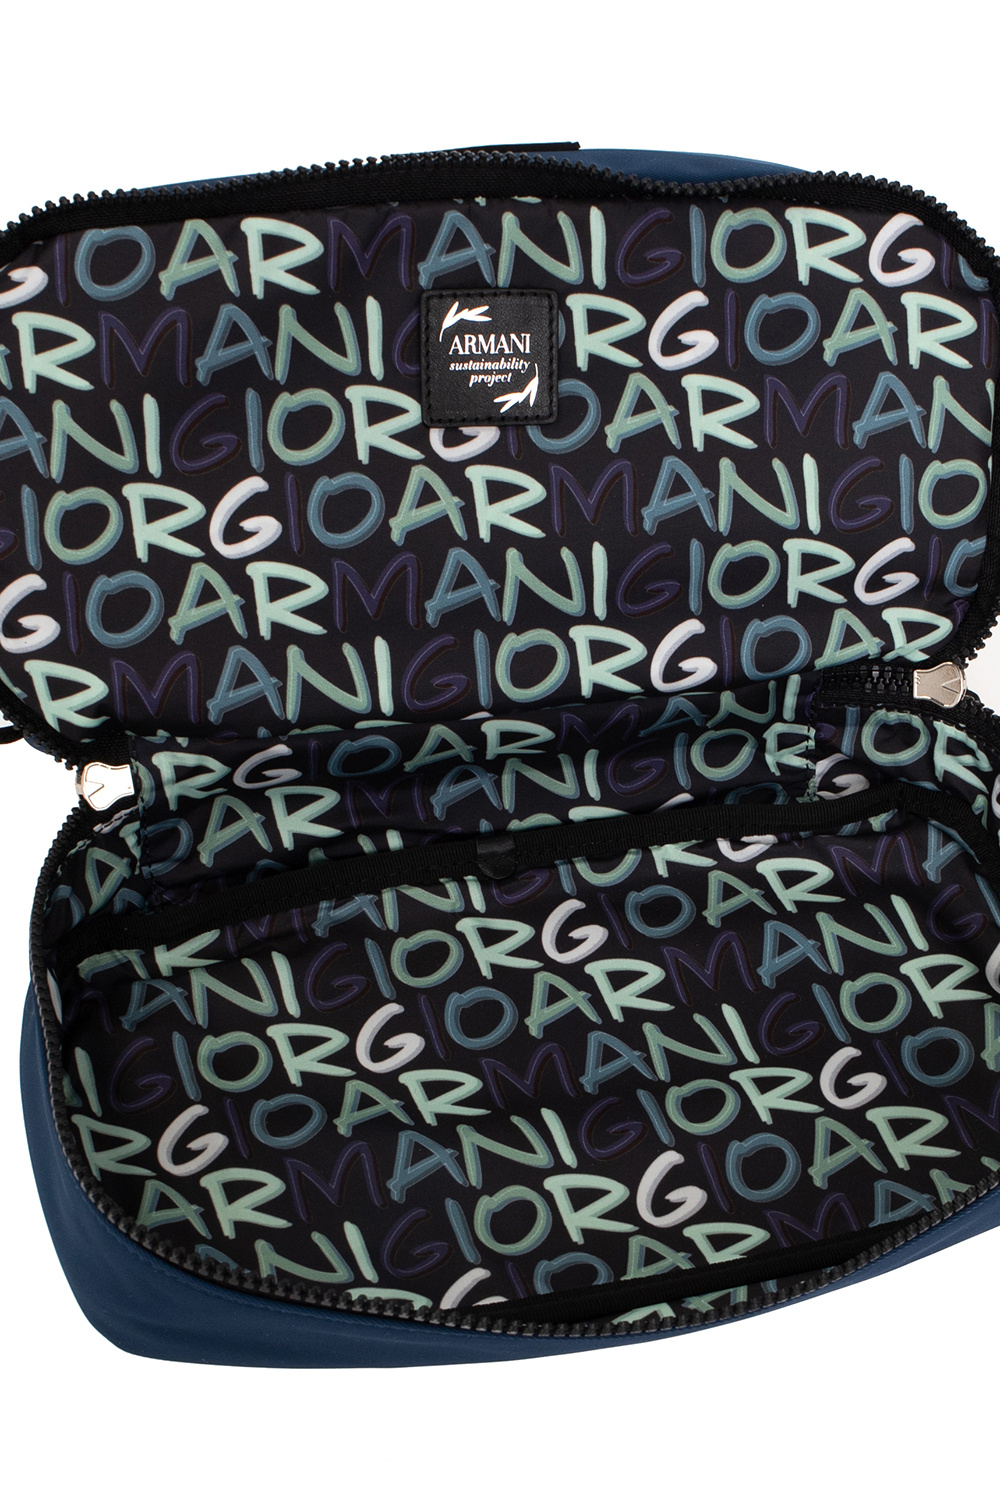 Giorgio armani Tops ‘Sustainable’ collection wash bag